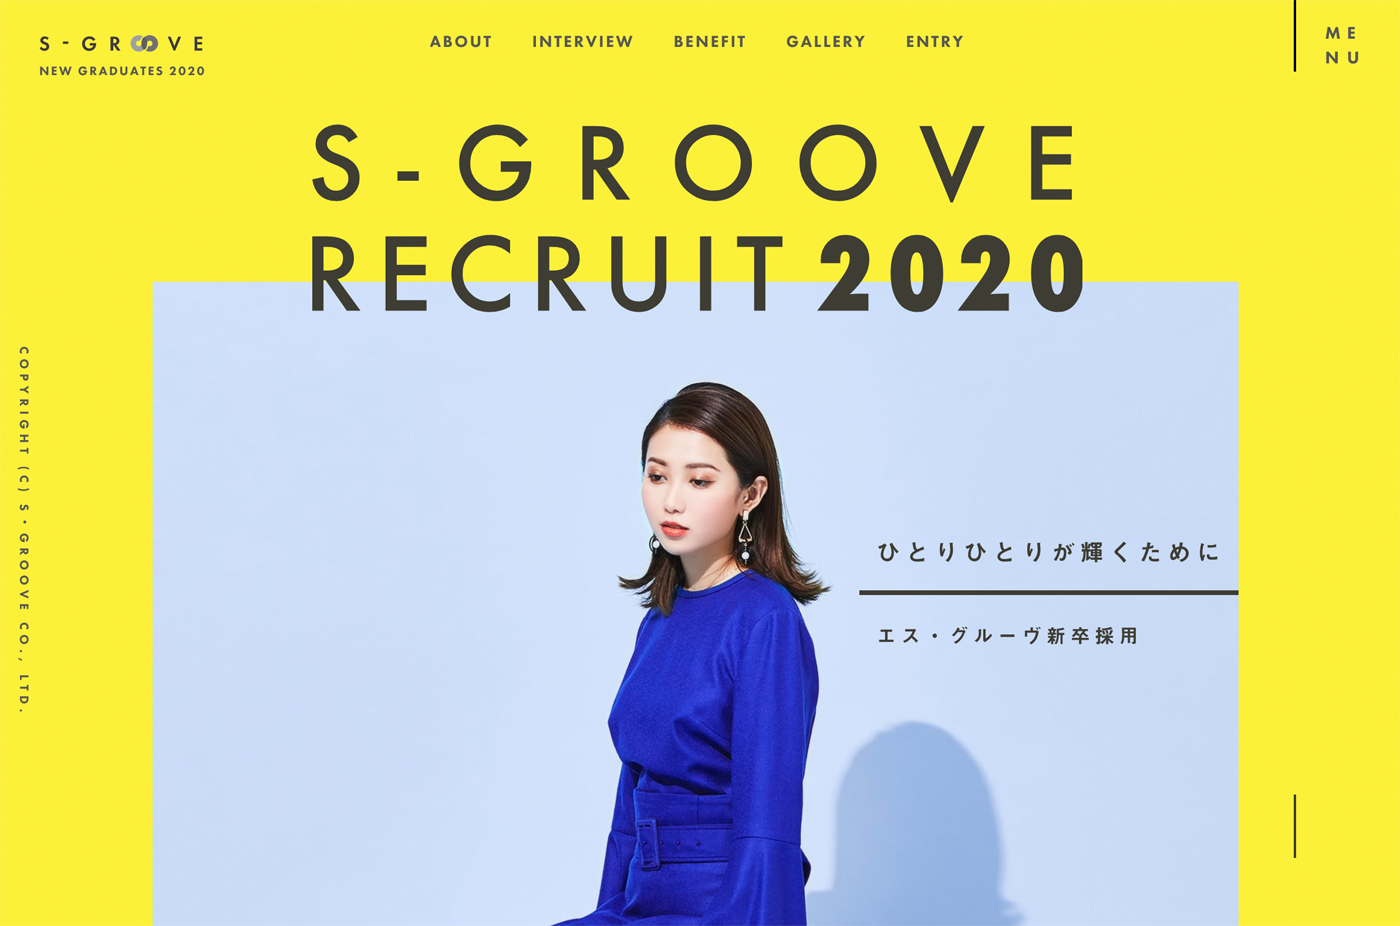 S-GROOVE 2020新卒採用ウェブサイトの画面キャプチャ画像